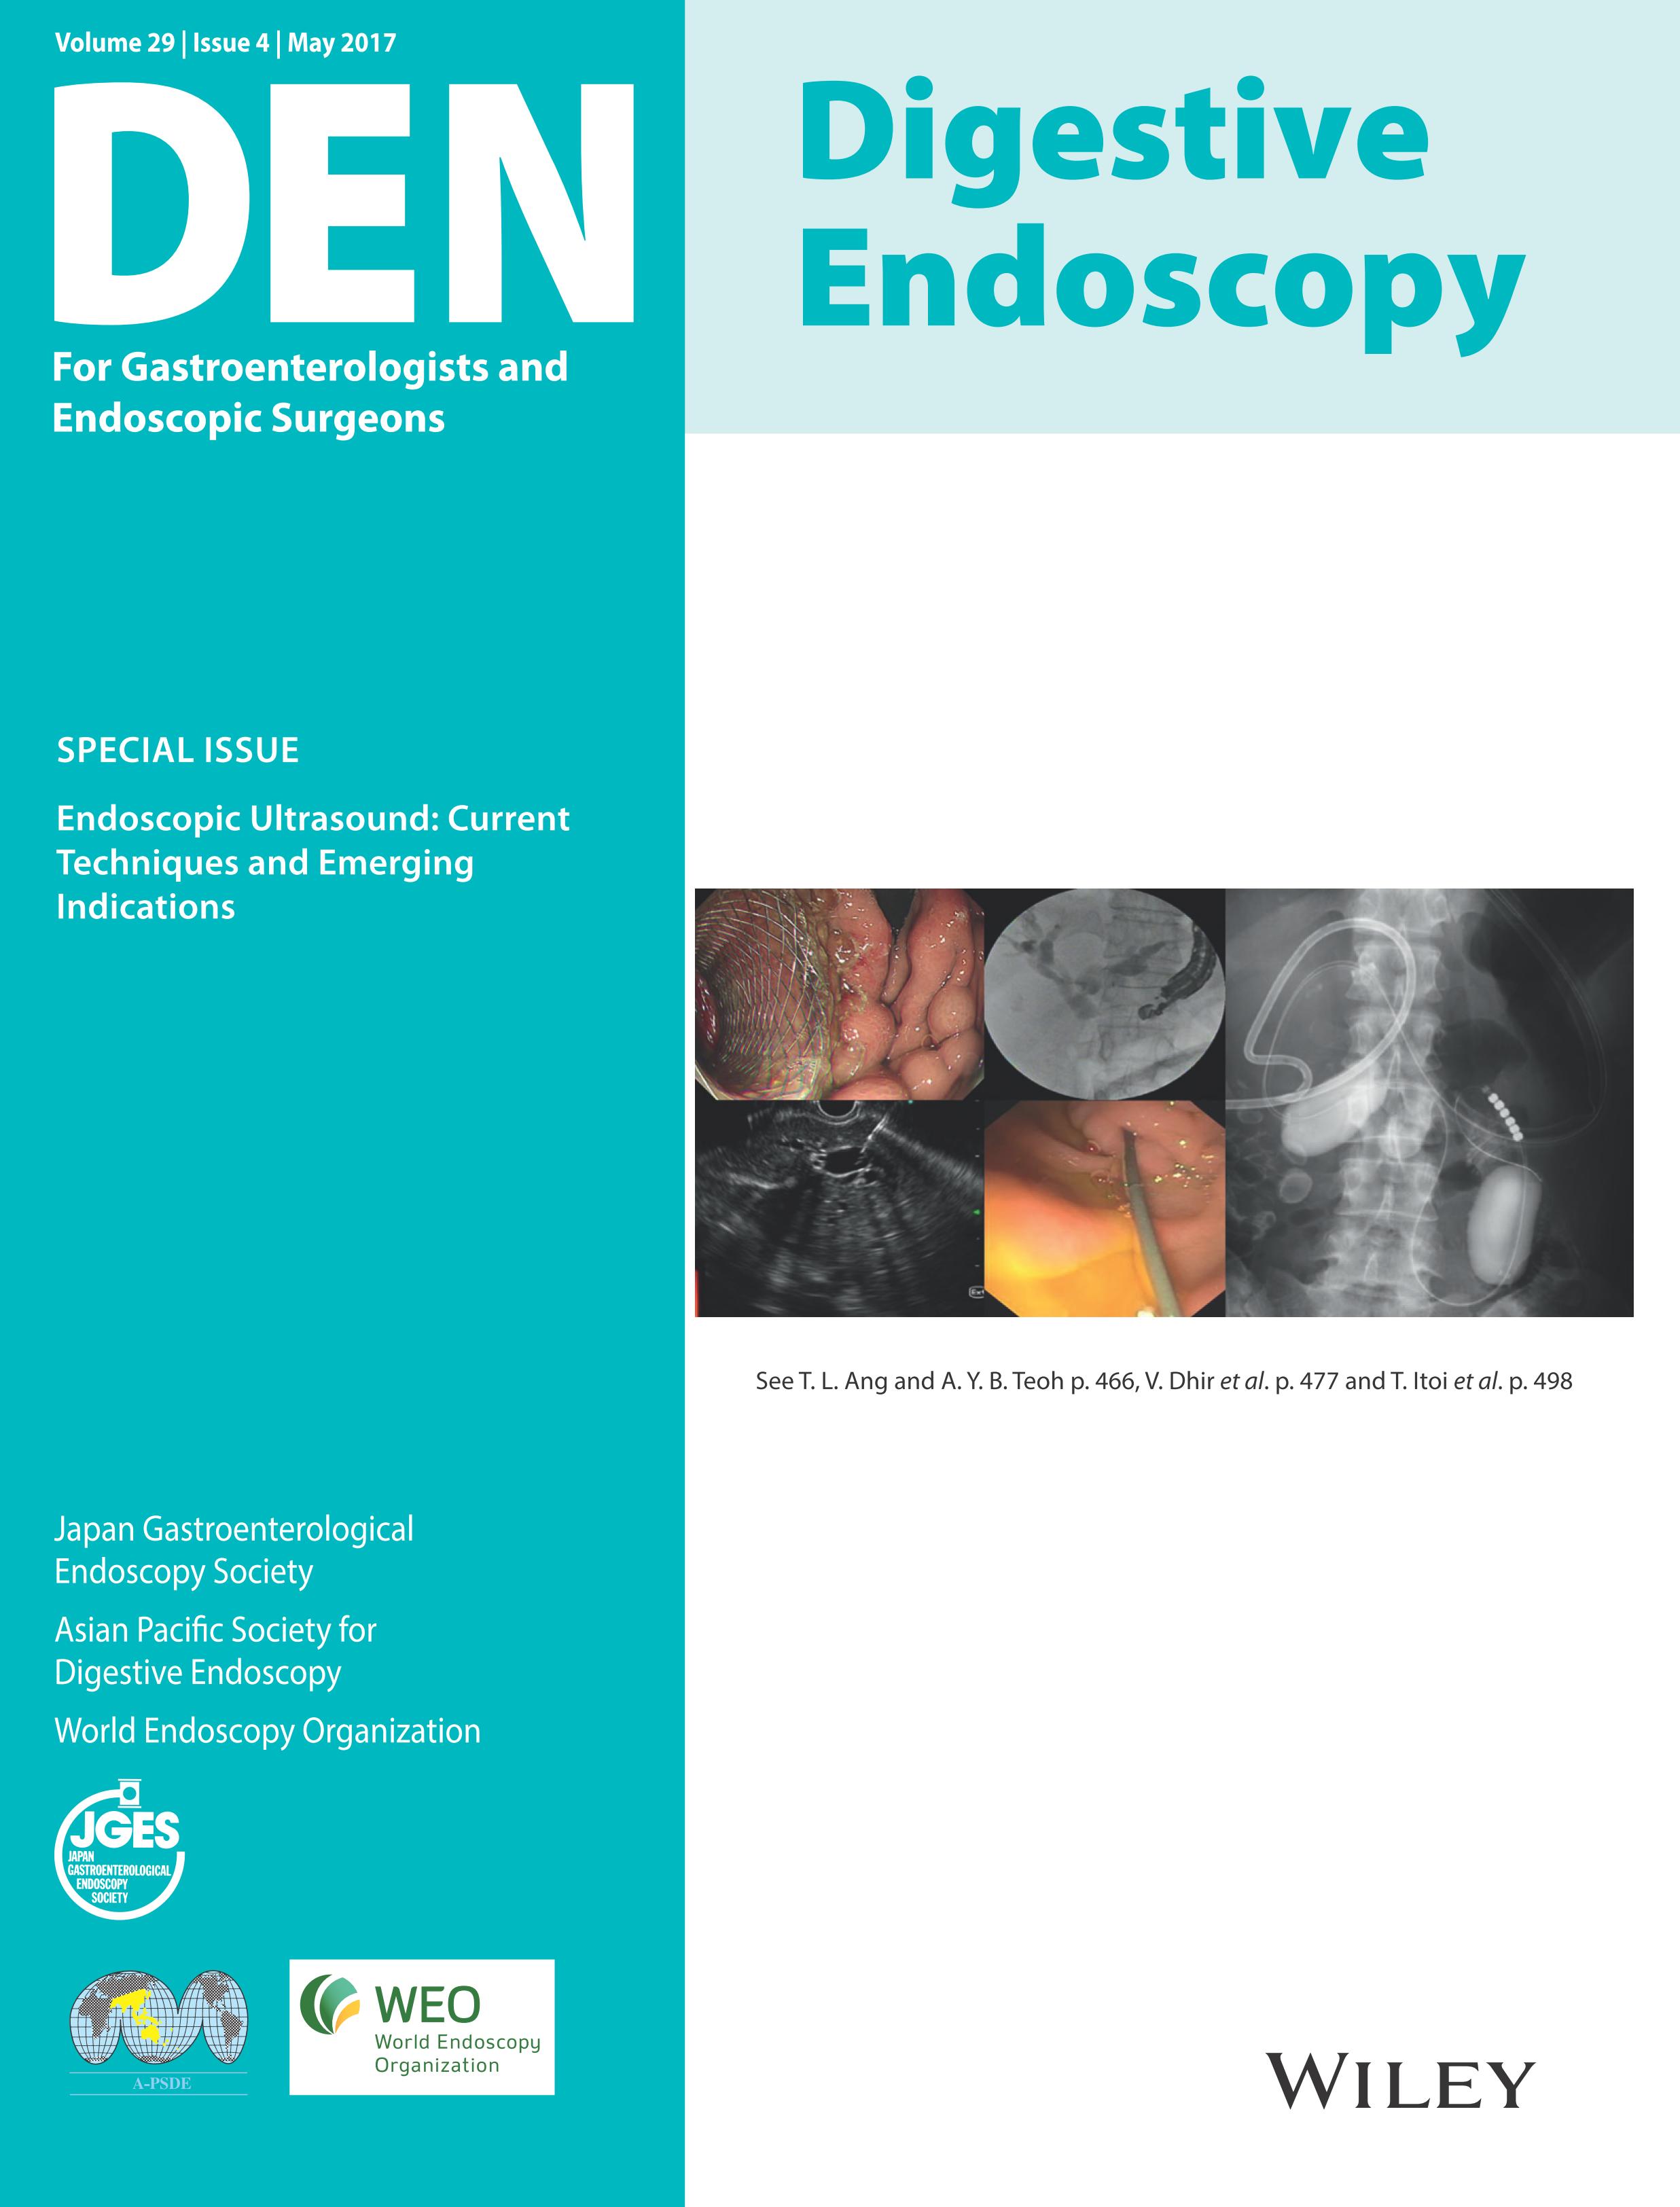 Digestive Endoscopy Vol29-4